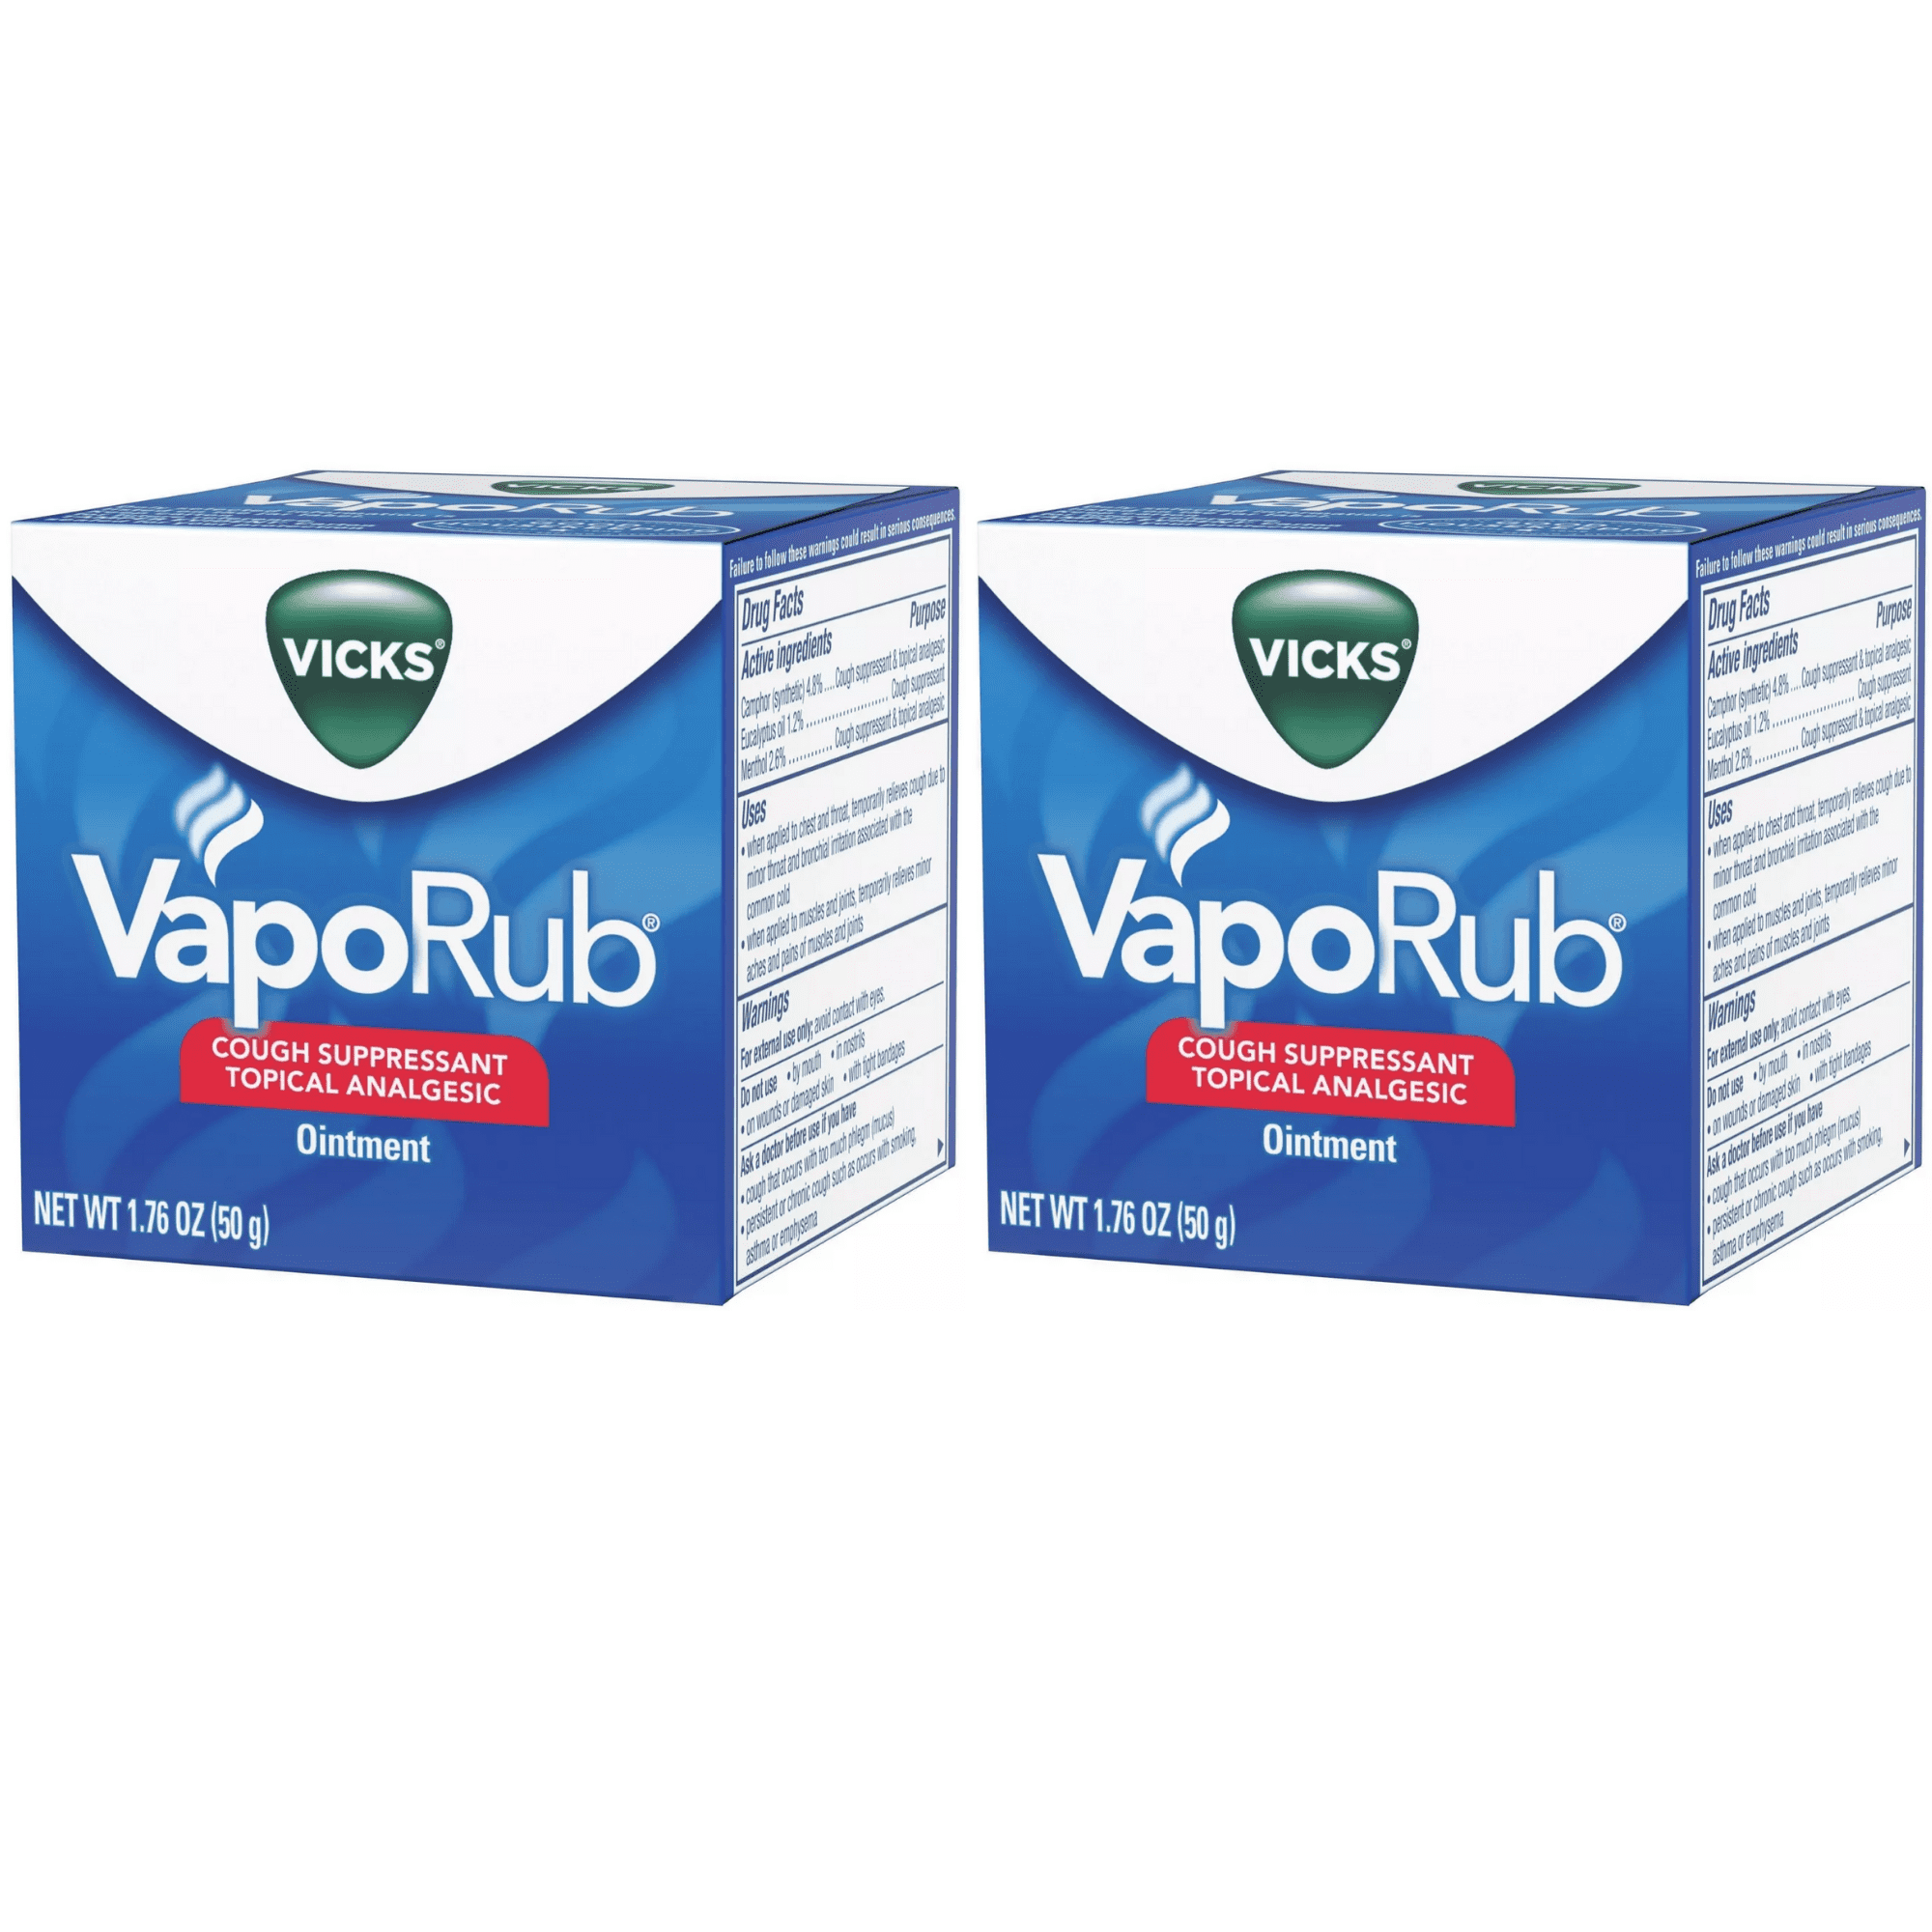 Vicks VapoRub Cough Suppressant Topical Analgesic Ointment (6 oz.)